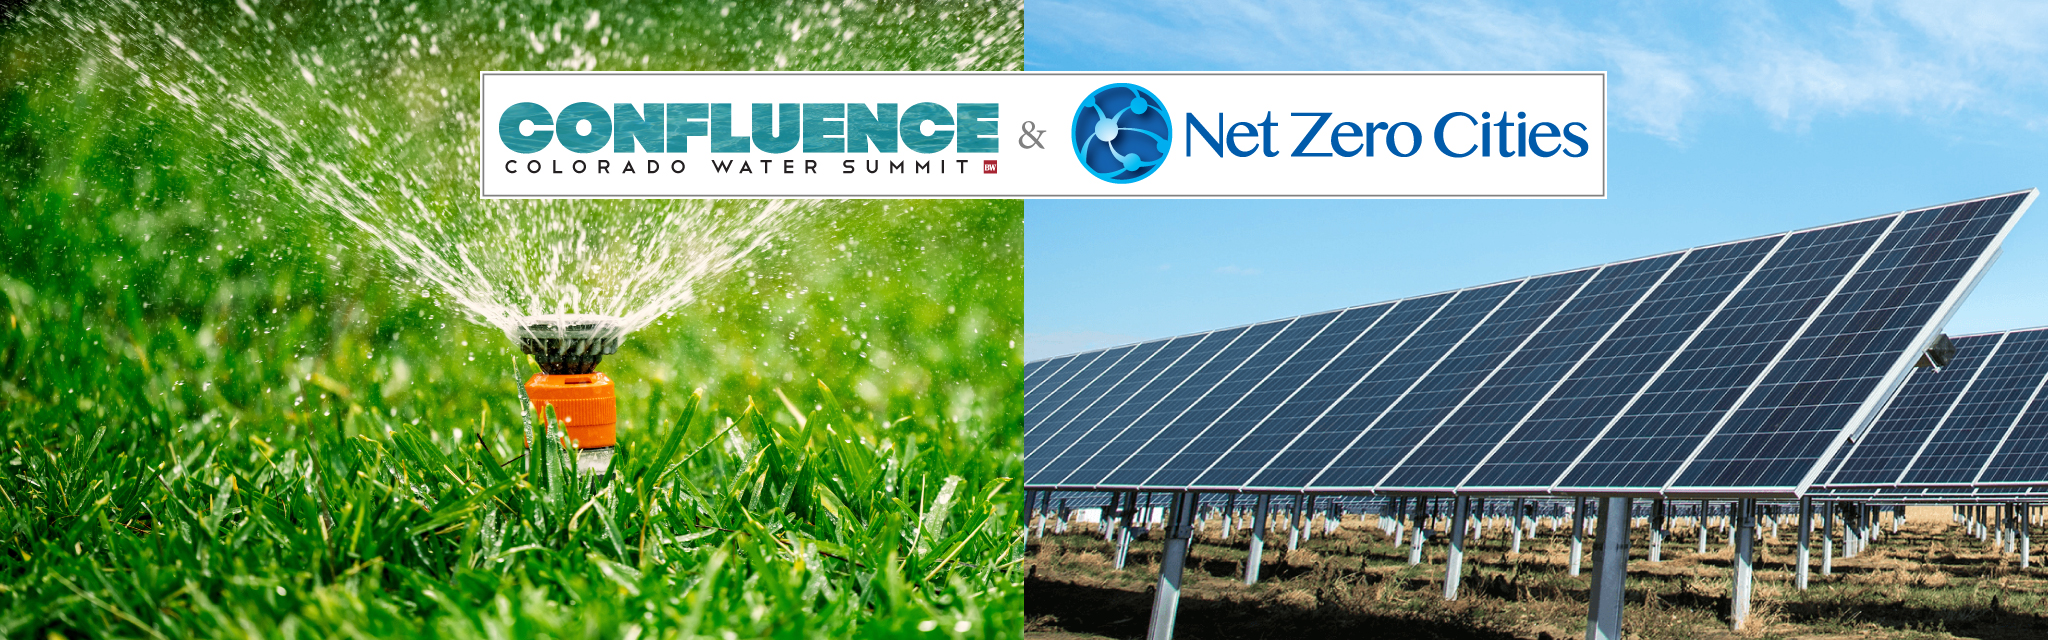 Confluence Colorado Water Summit and Net Zero Cities. 